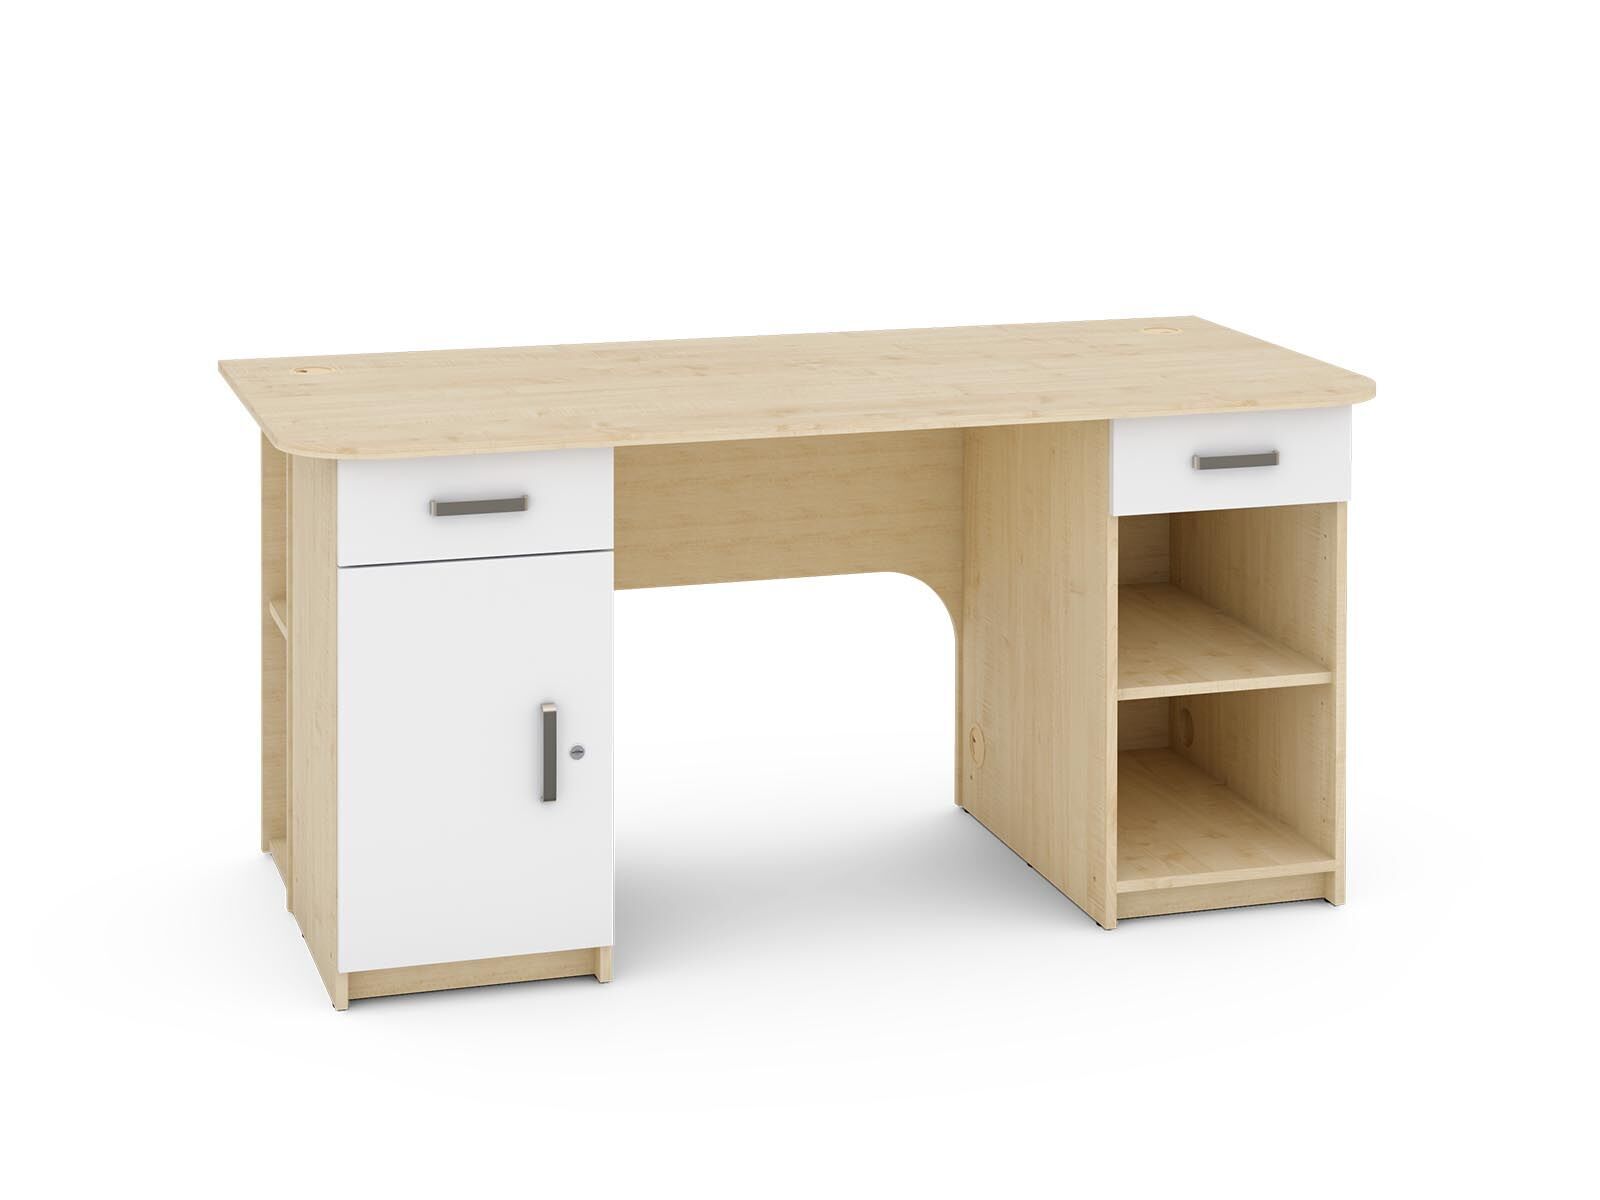 MIX bureau met opbergruimte - 160 x 75 x 75 cm